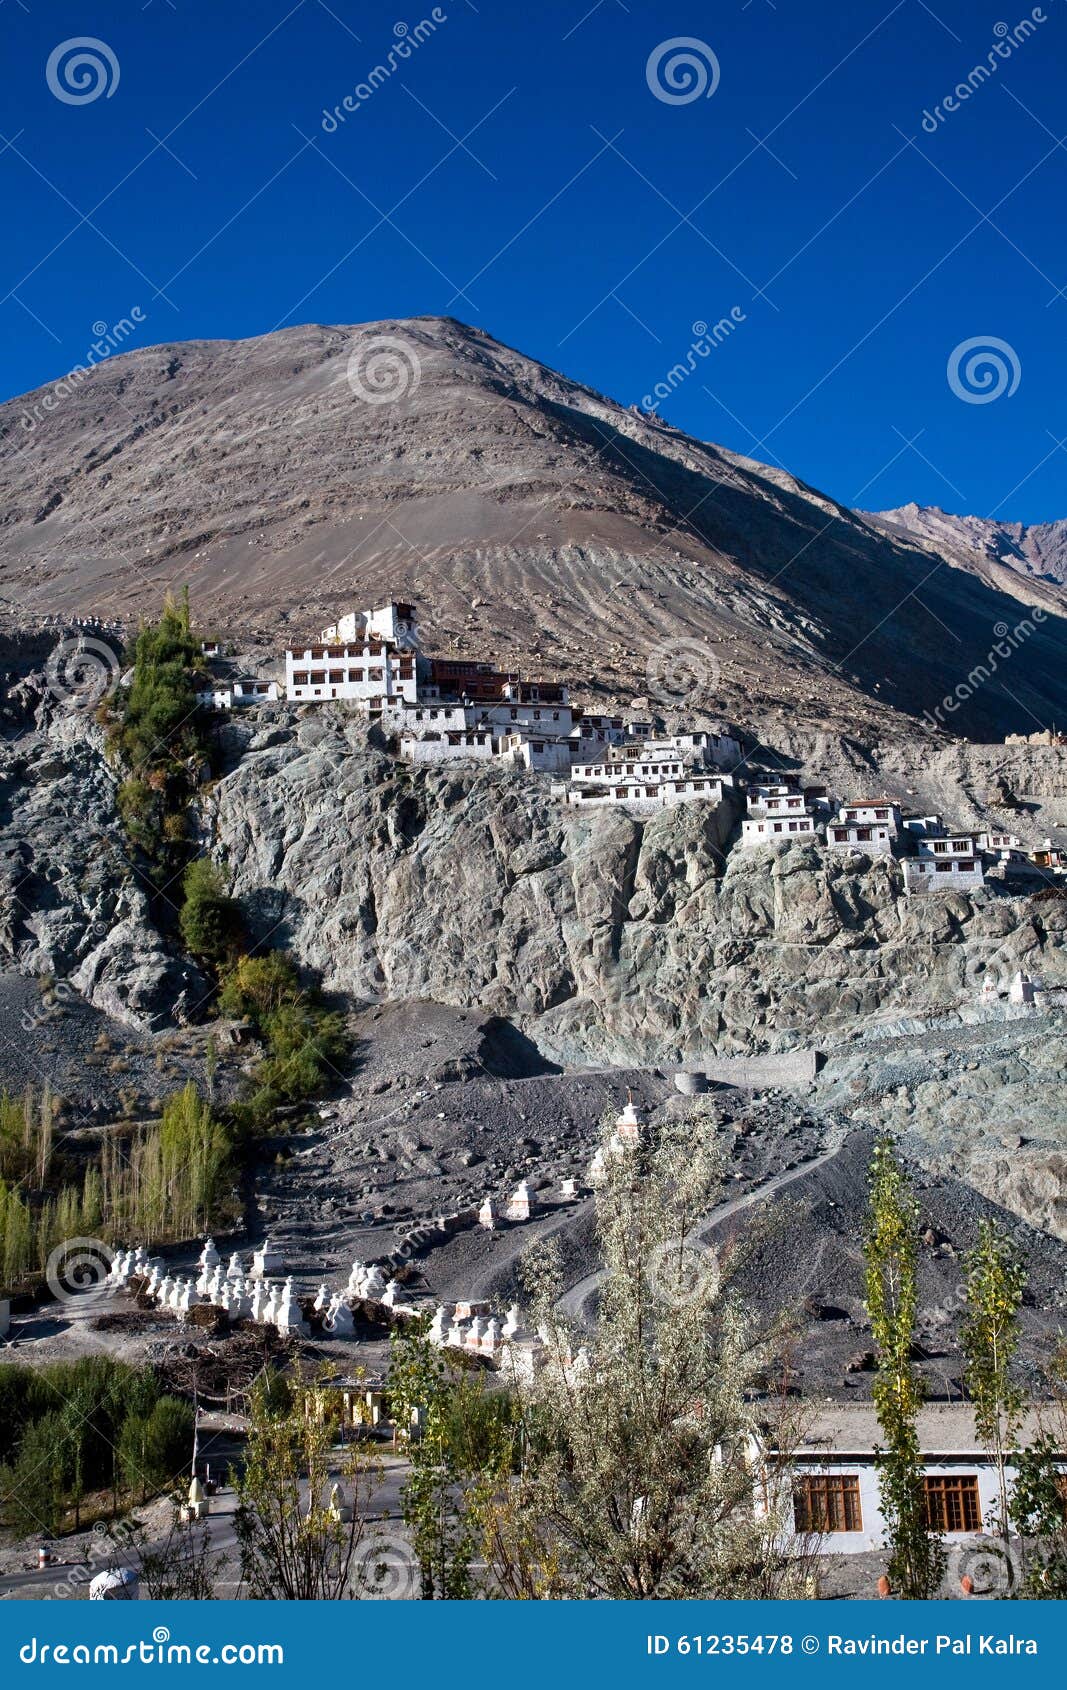 Diskit Monastery Nubra Valleyleh Ladakh Jammu And Kashmir